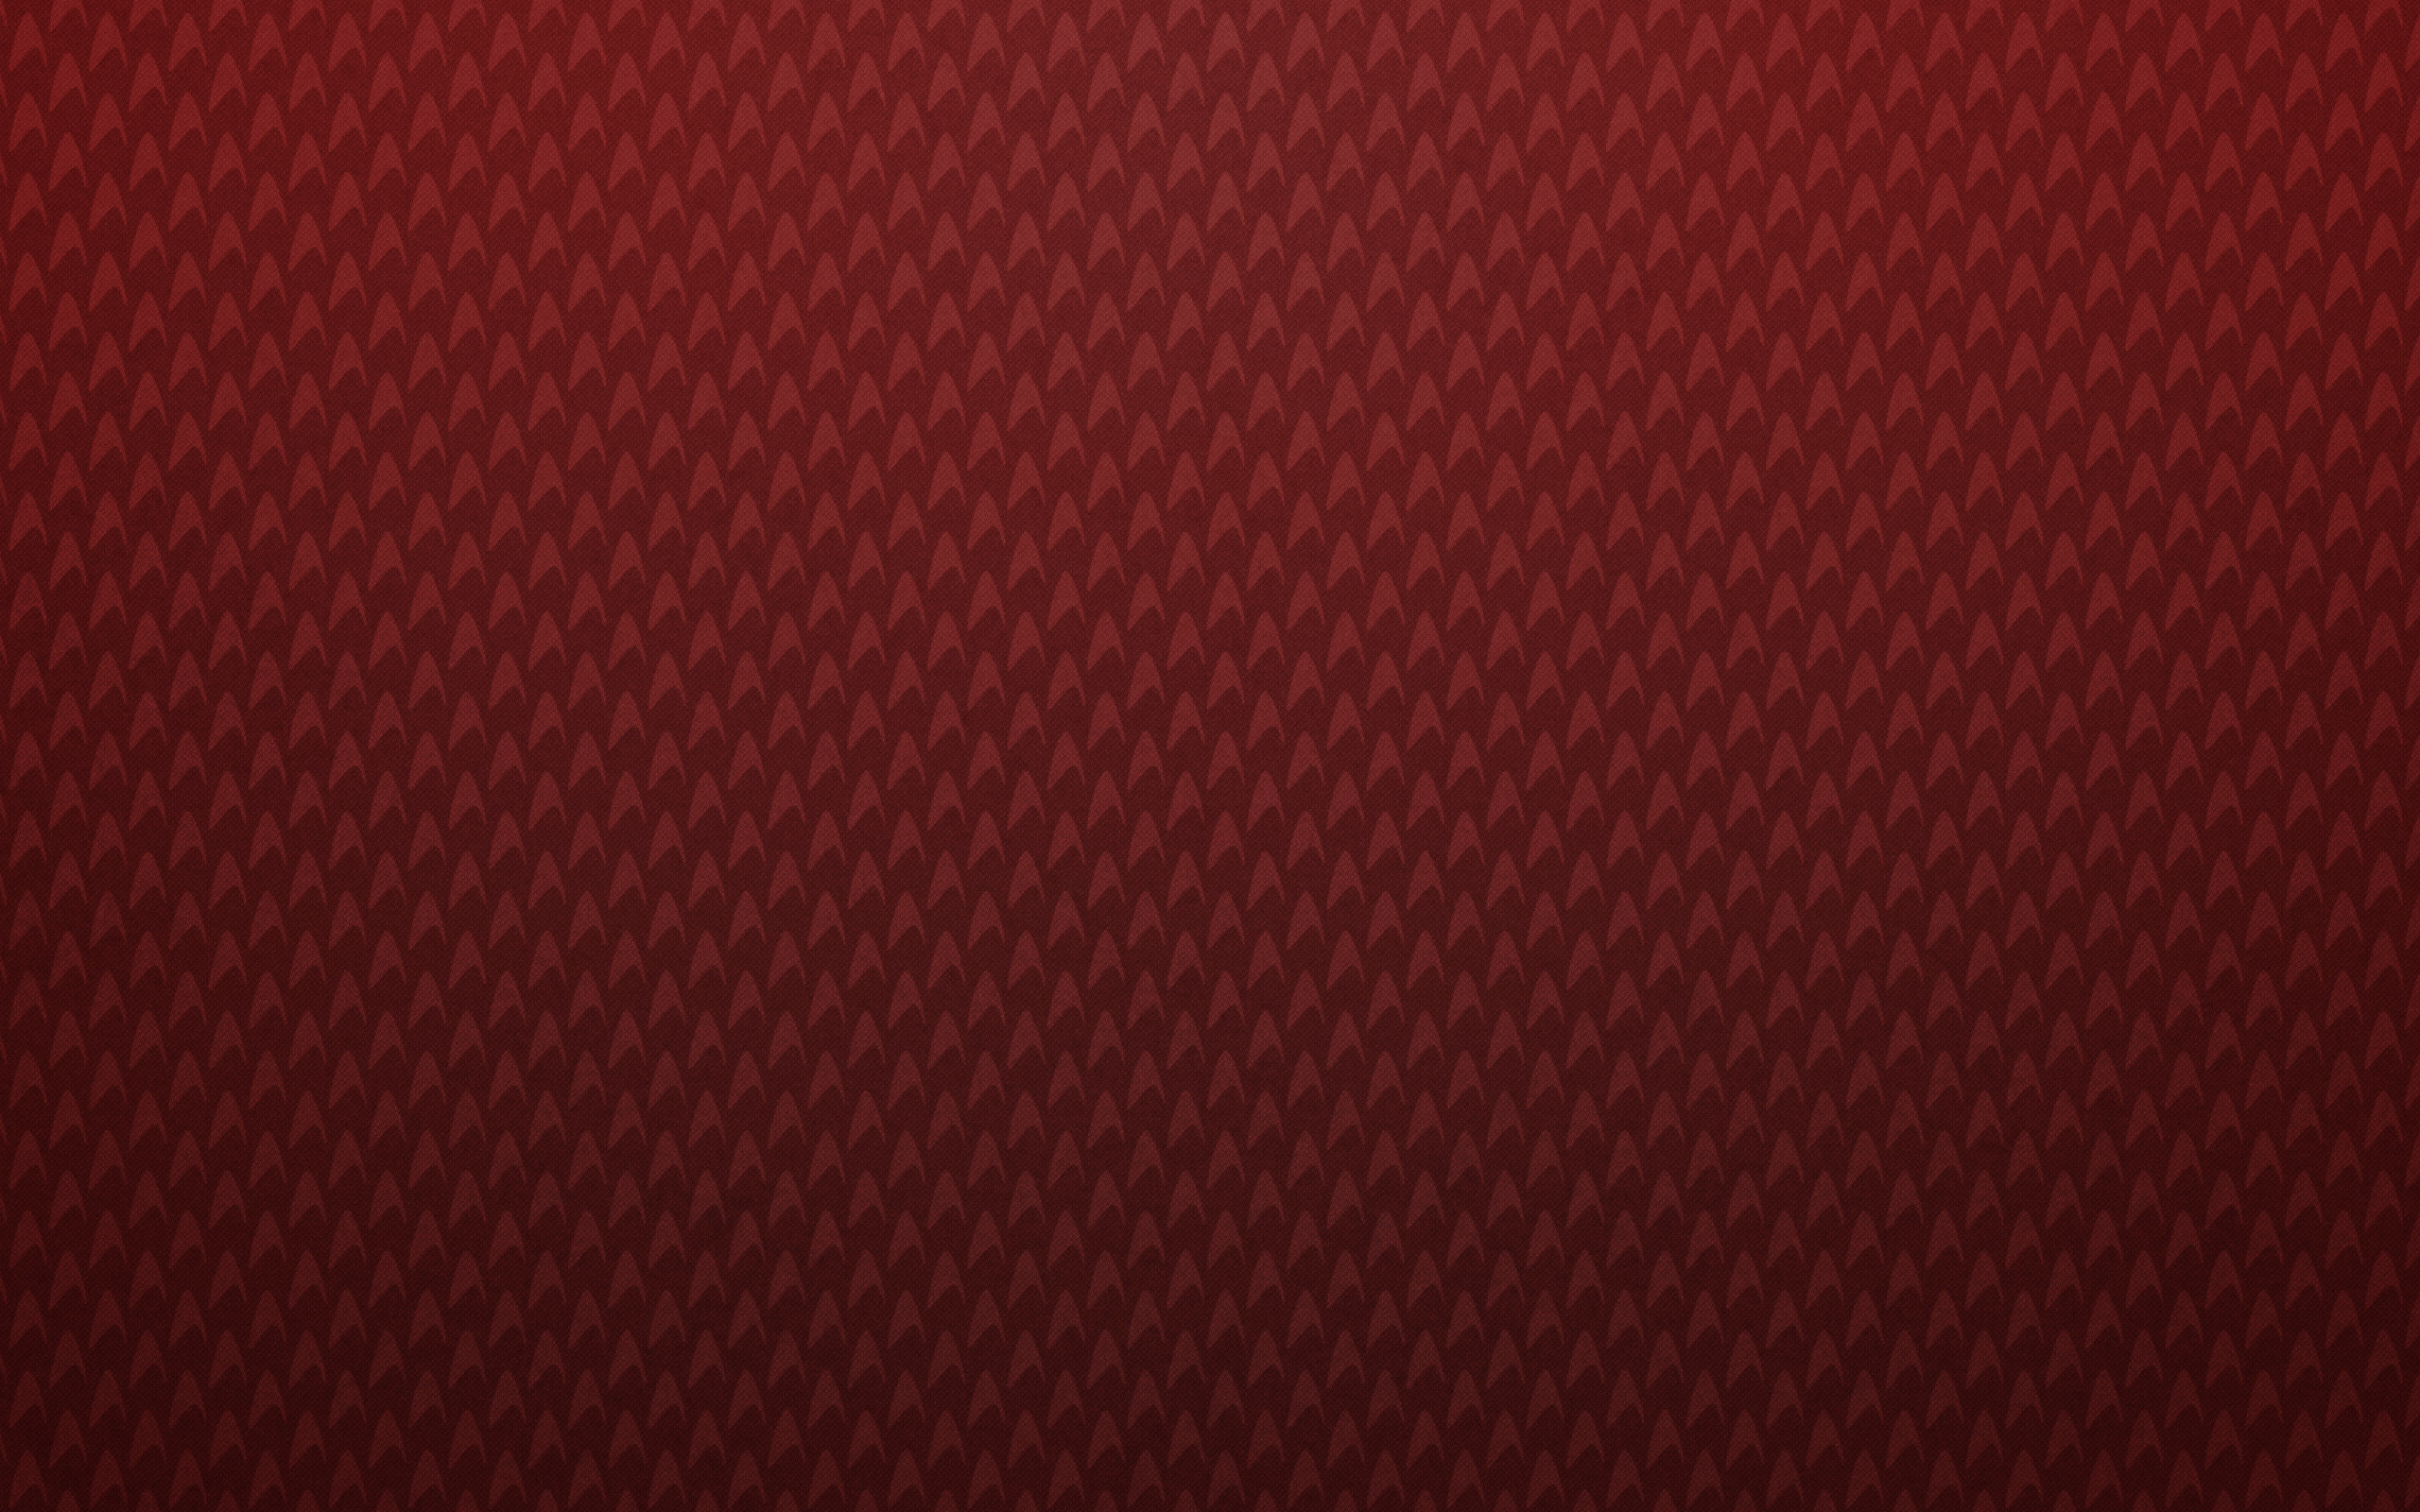 2560x1600 Red patterns textures backgrounds triangle star trek logos wallpaper |   | 16155 | WallpaperUP